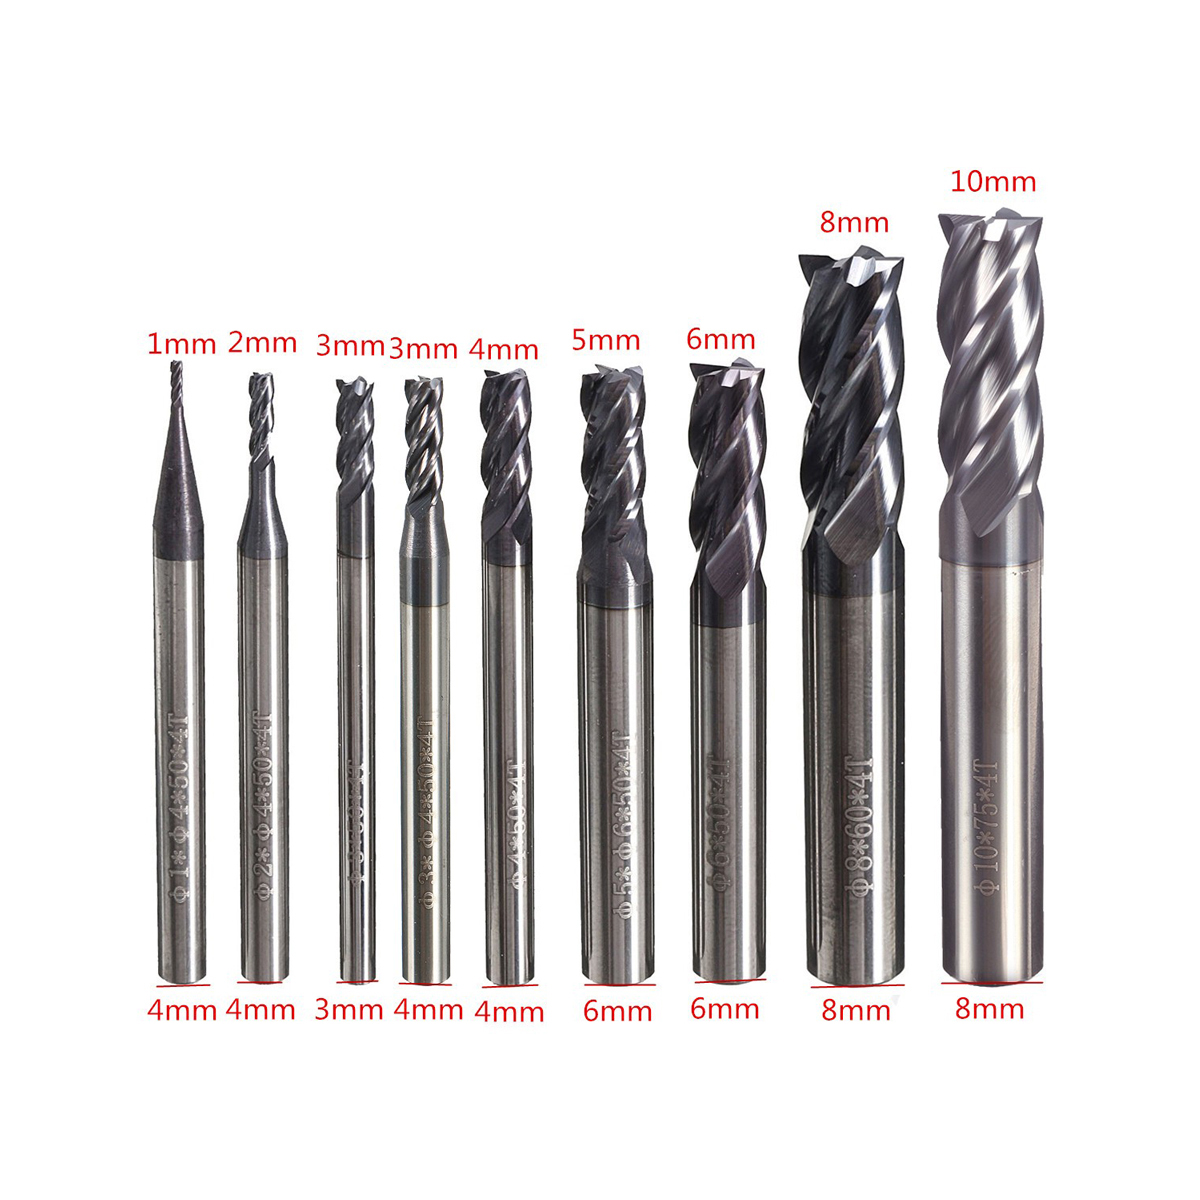 Drillpro 4 Flutes Tungsten Carbide End Mill Set Straight Shank CNC tool 1MM-10MM,Tungsten steel,4 Flute End Mill Cutter